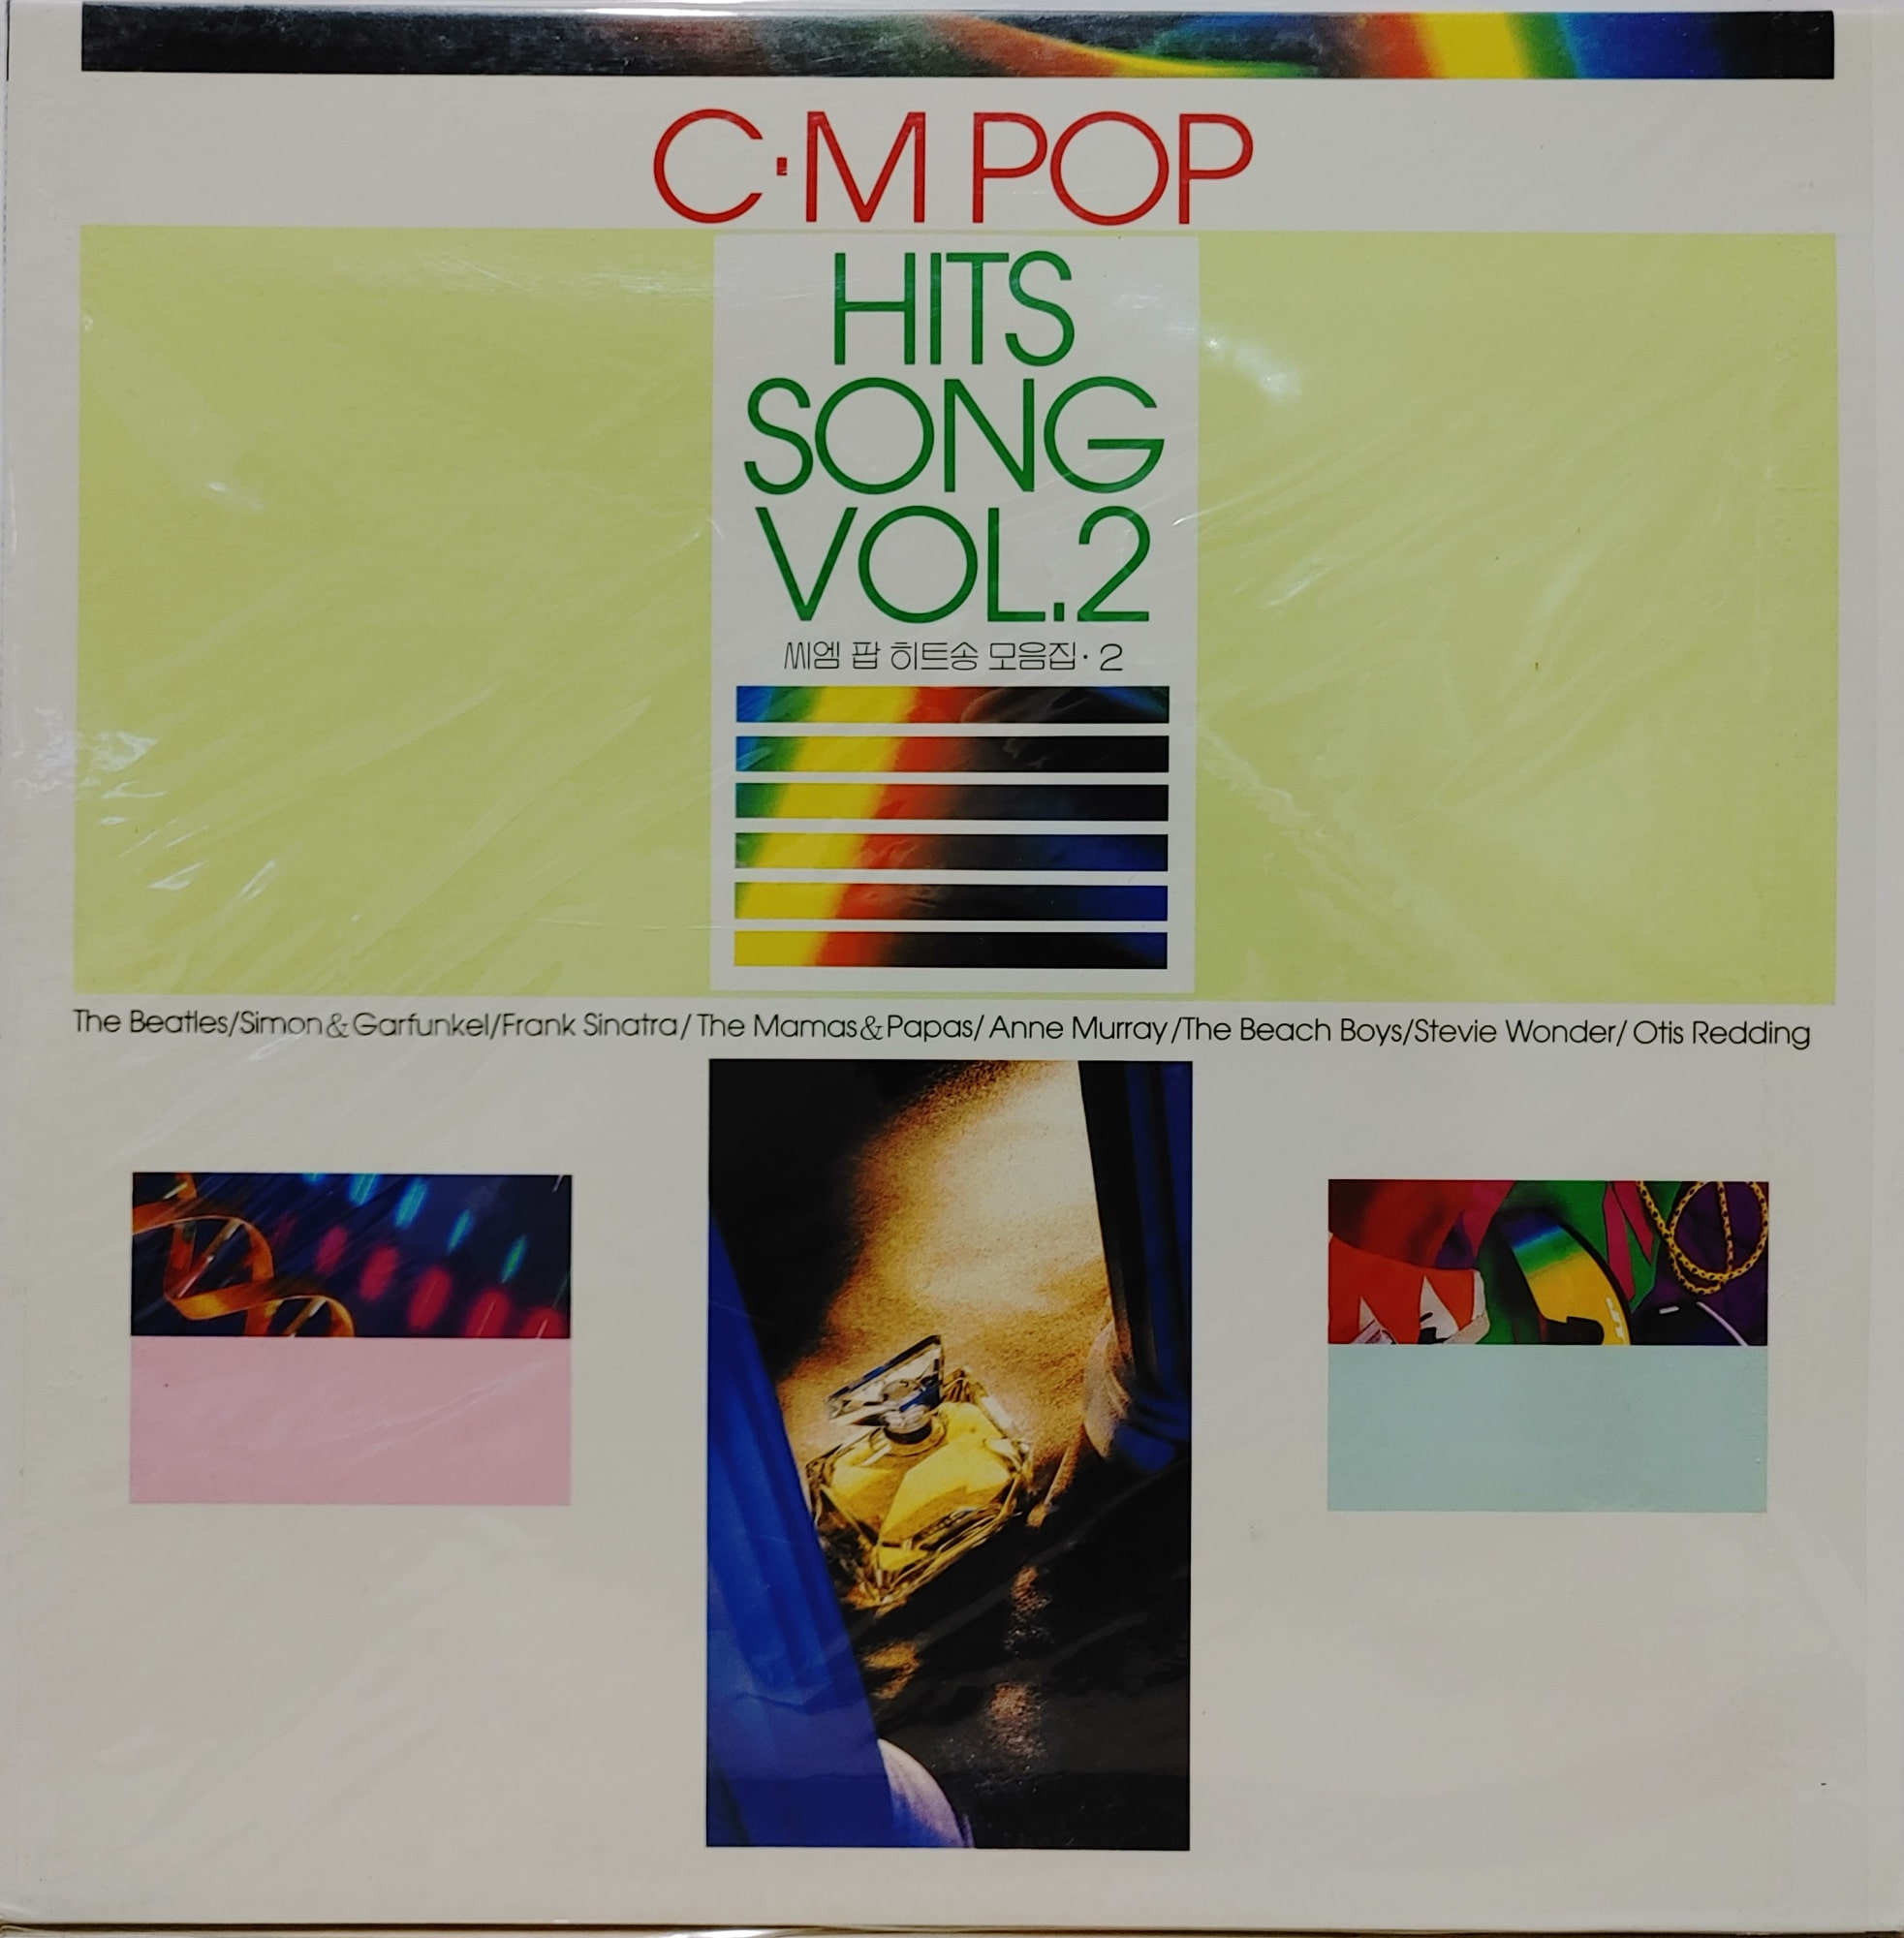 C.M POP HITS SONG VOL.2